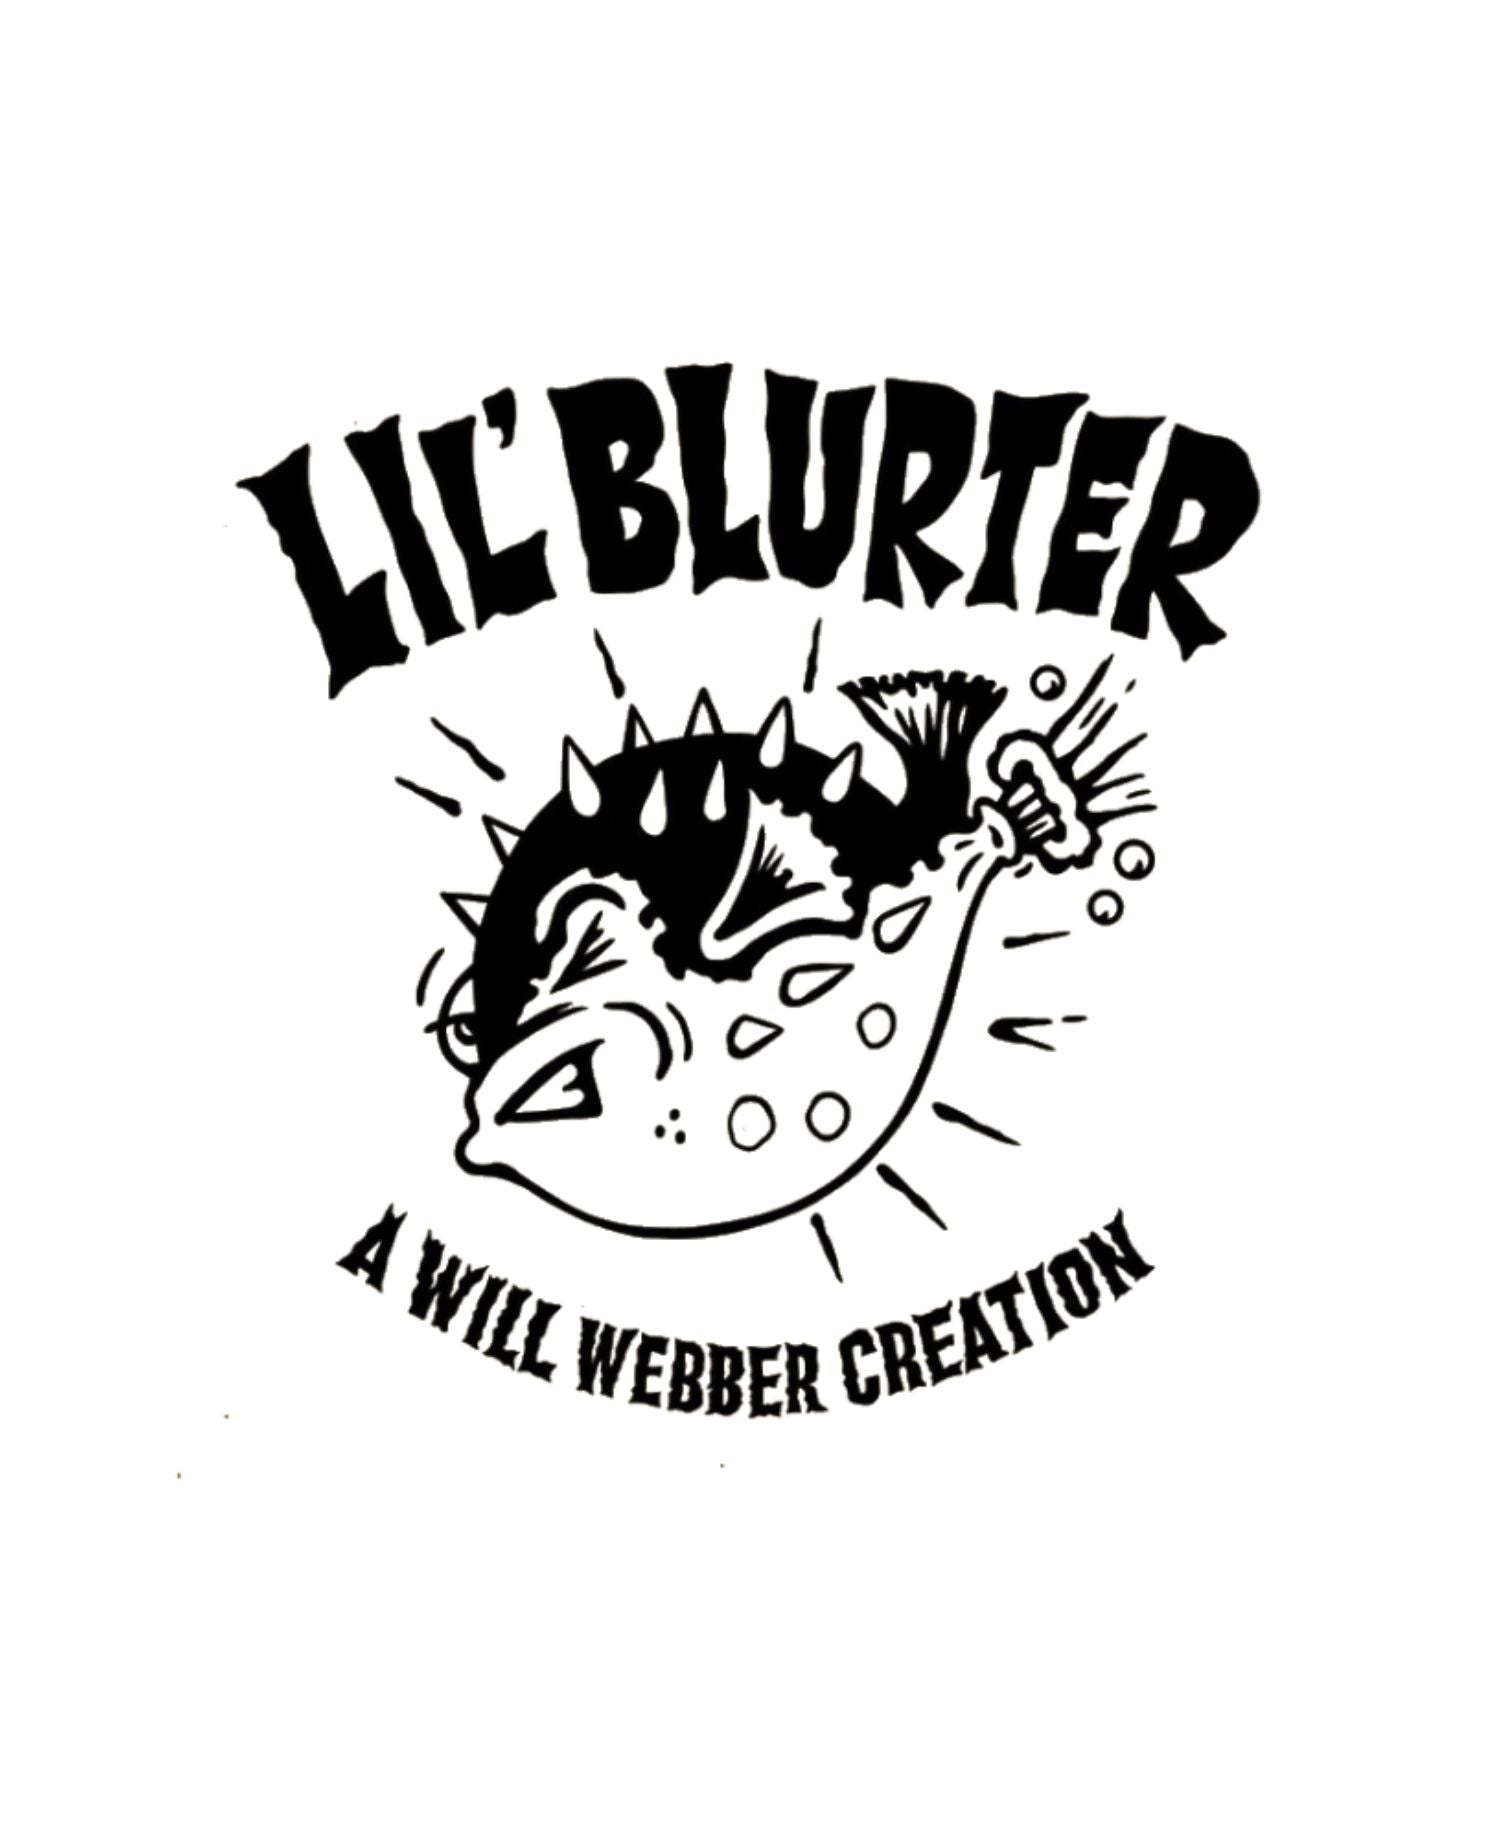 WILL WEBBER'S 'LIL BLURTER'